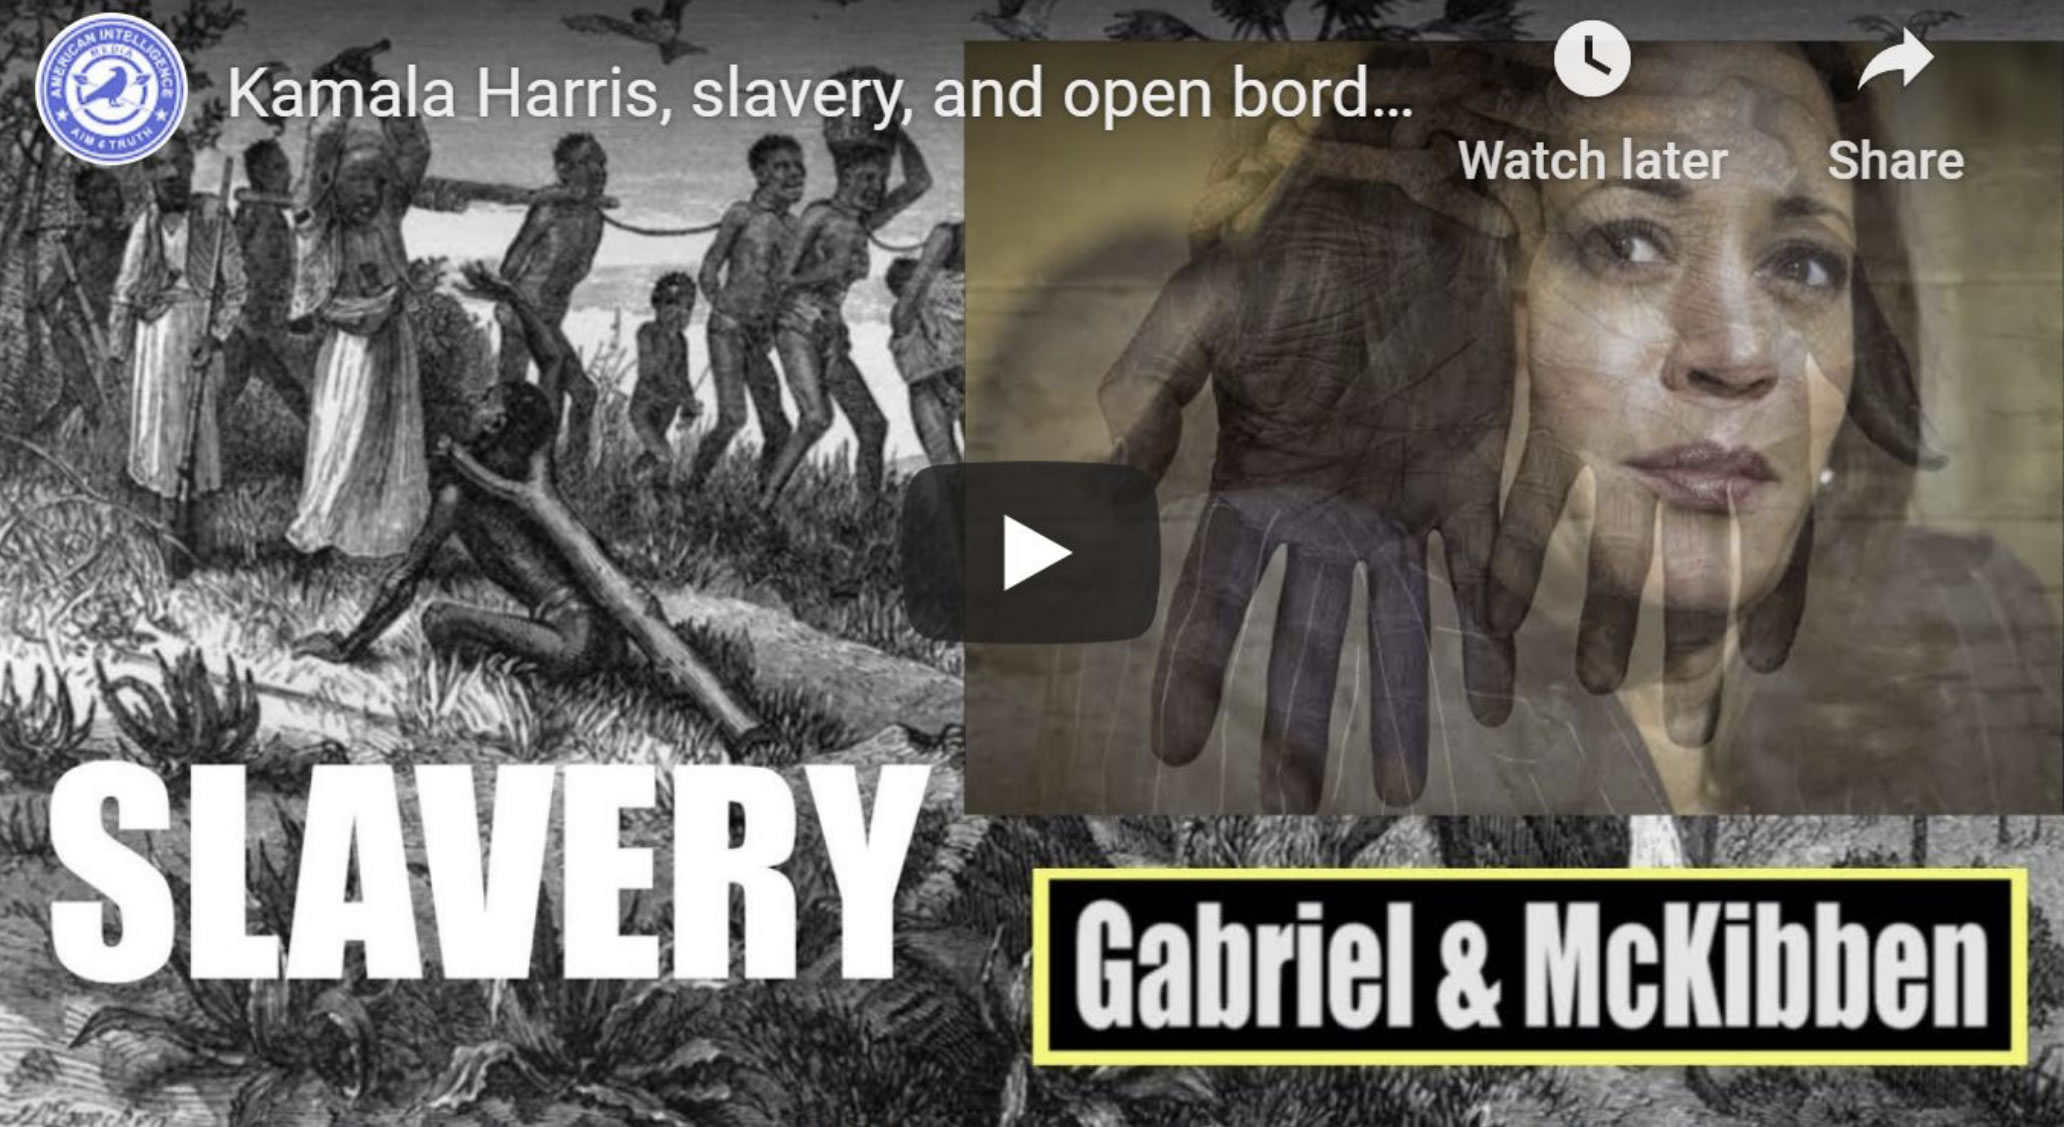 Gabriel, McKibben. (Aug. 14, 2020). Kamala Harris, slavery, and open borders. American Intelligence Media, Americans for Innovation.